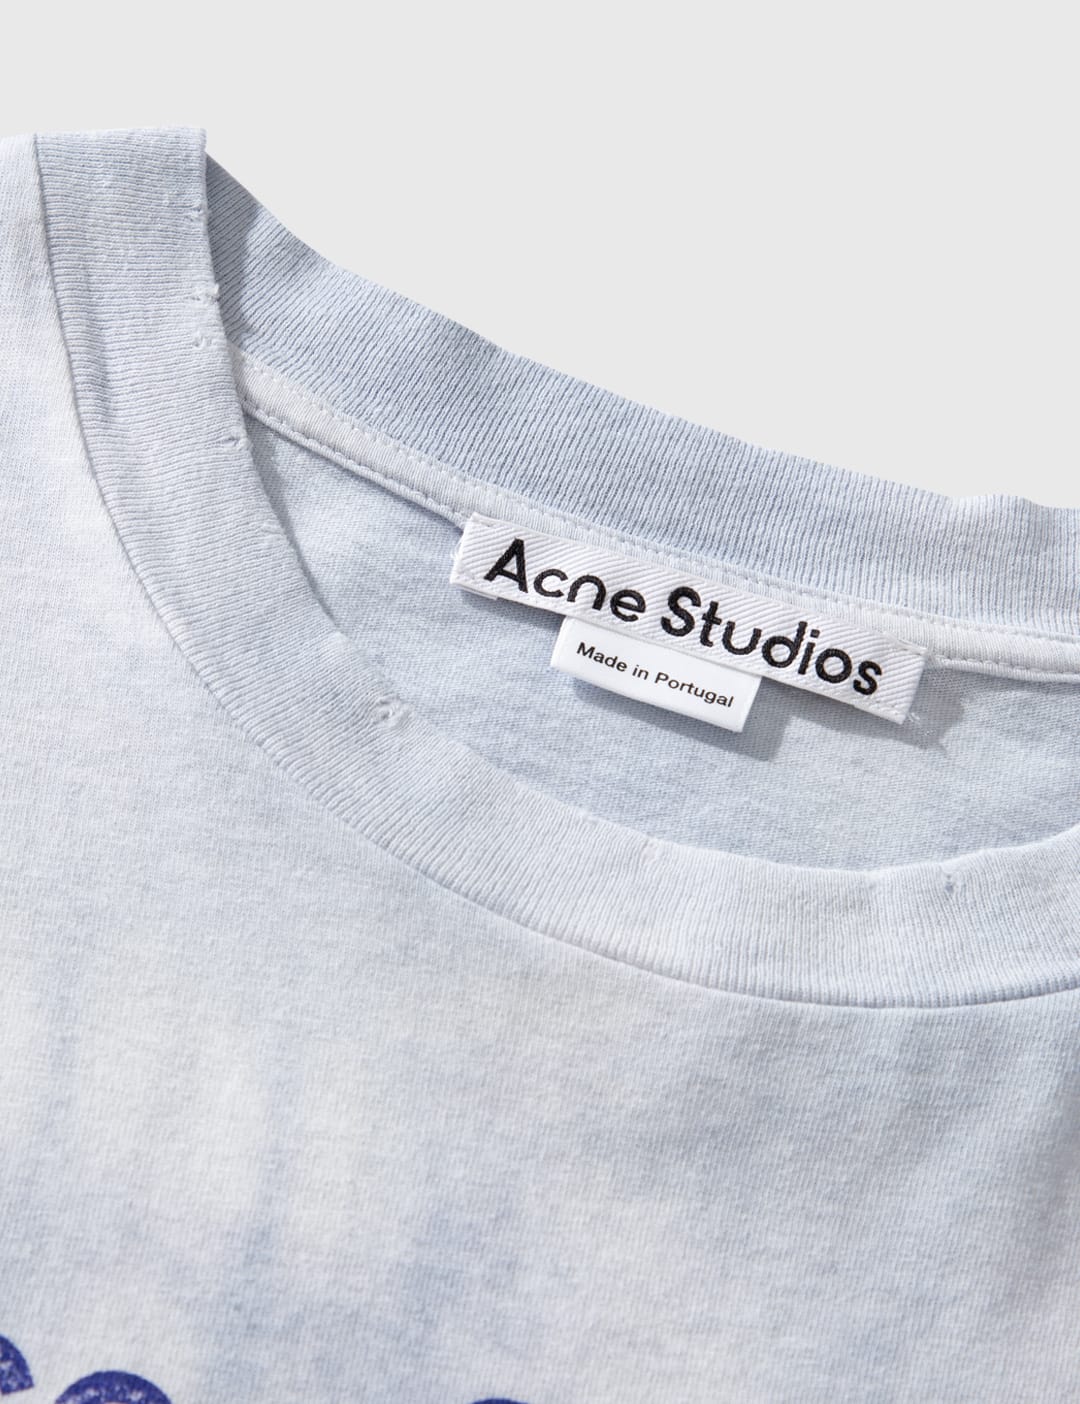 acne studios tシャツ 正規品 ブルー ロゴ